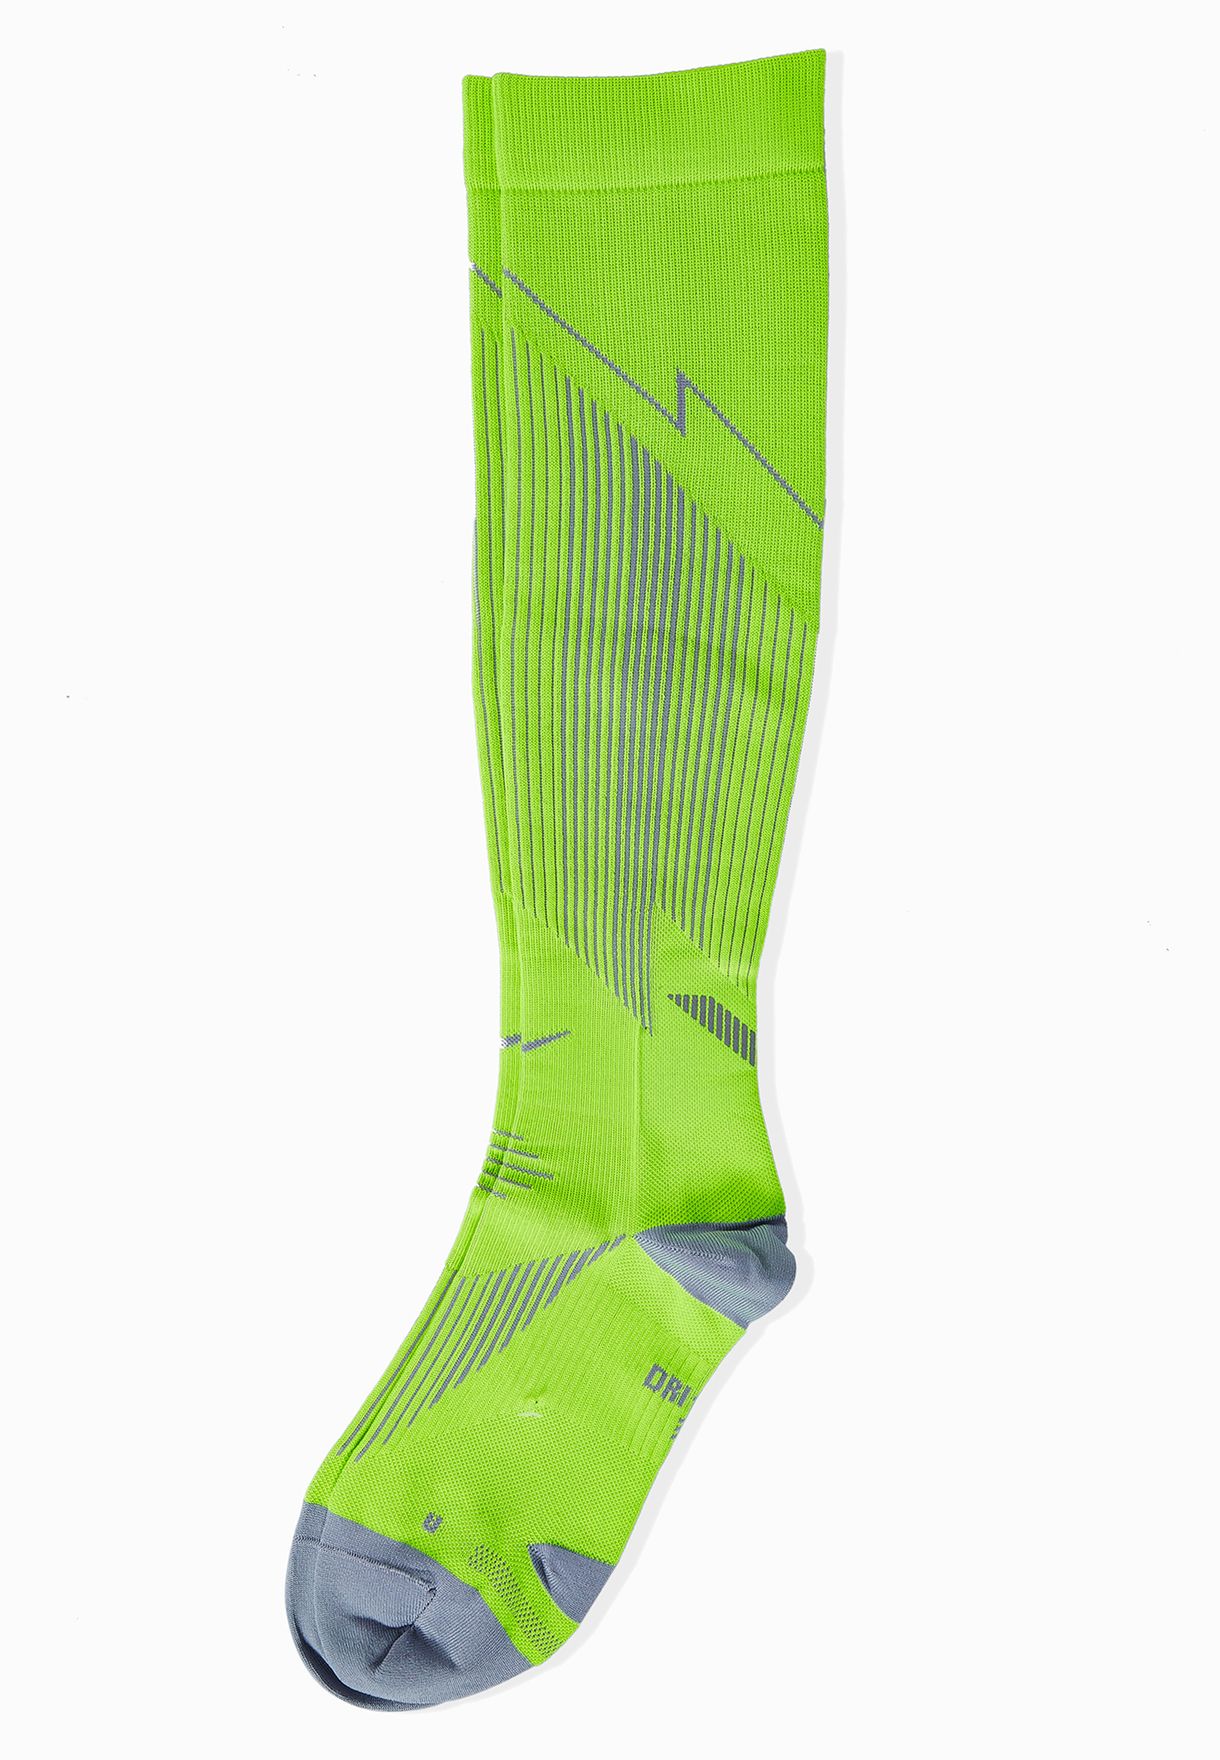 neon green nike socks